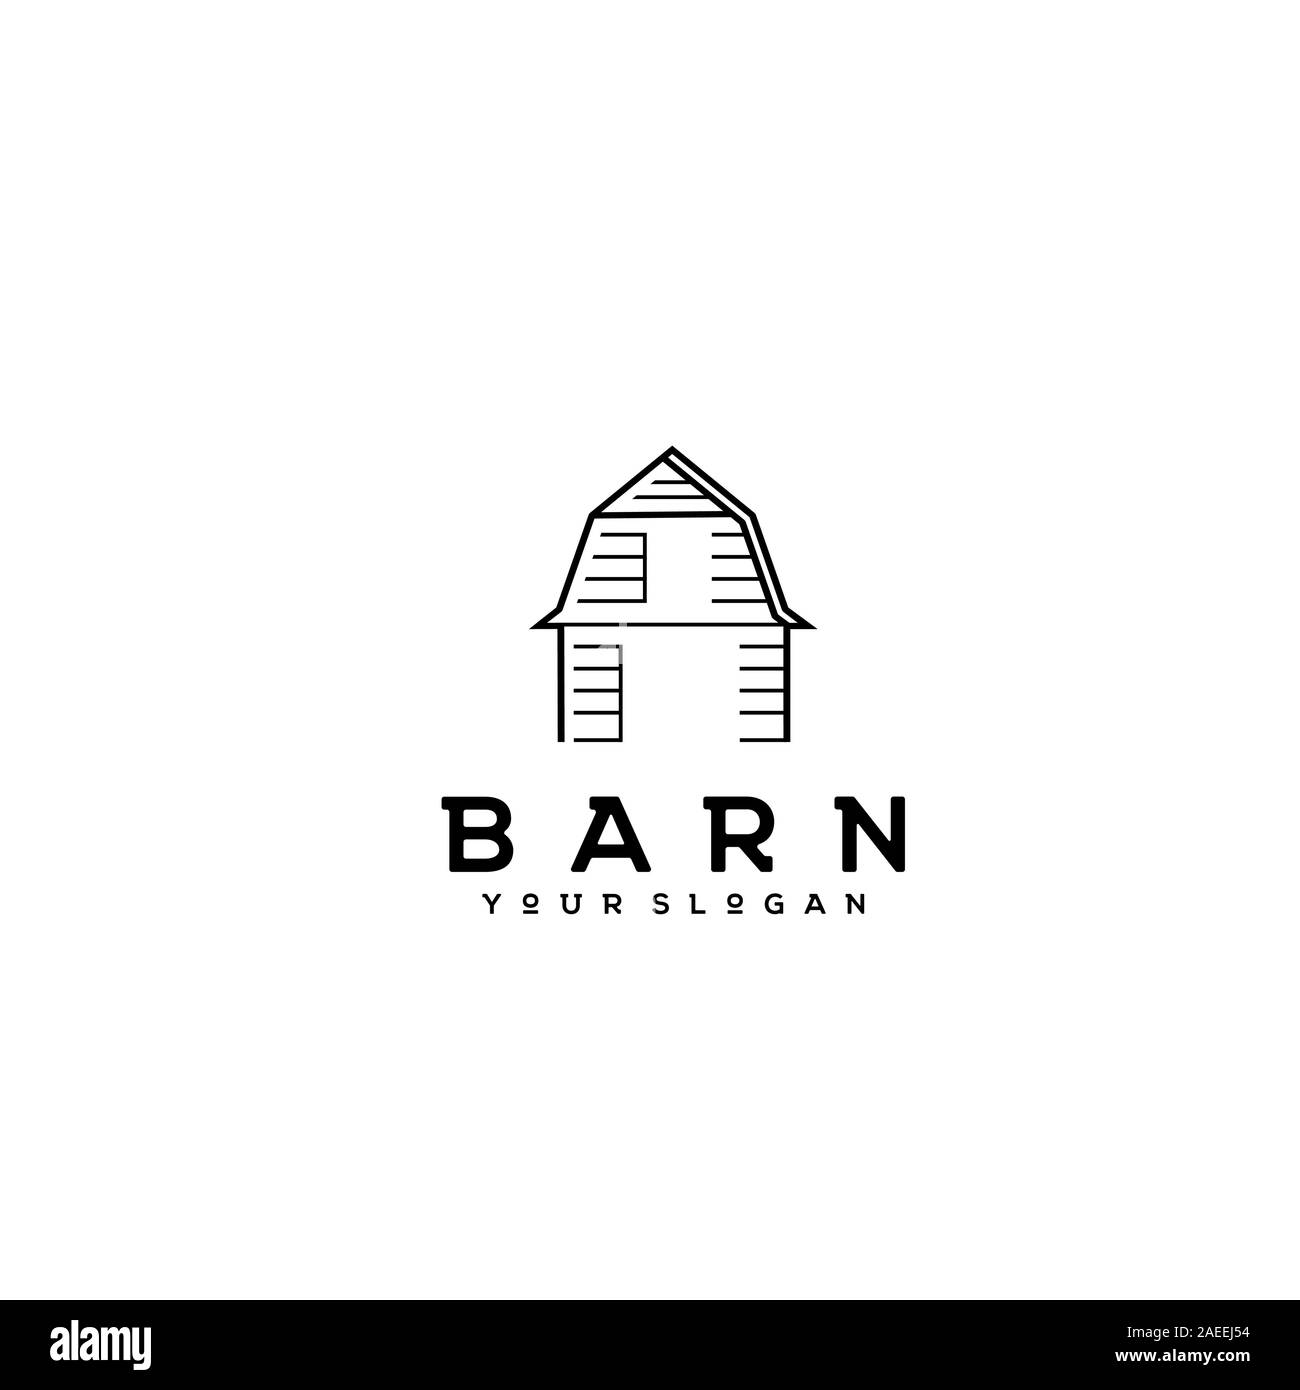 Golden Wood Barn Farm Minimalist Vintage Retro Line Art Logo design ...